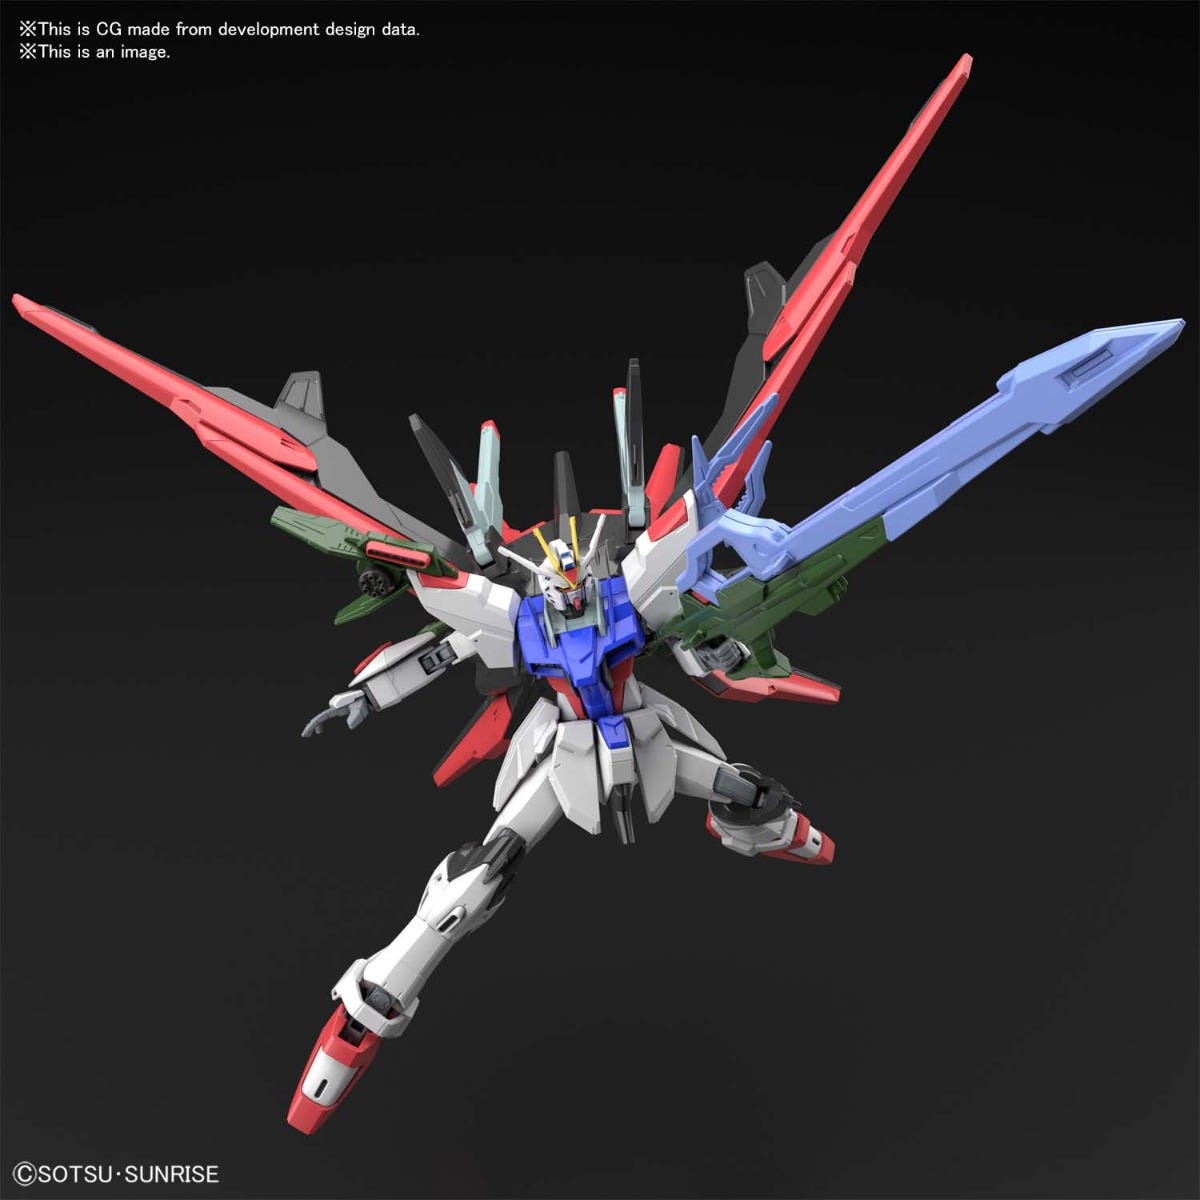 HG Gundam Perfect Strike Freedom "Gundam Breaker Battlogue"